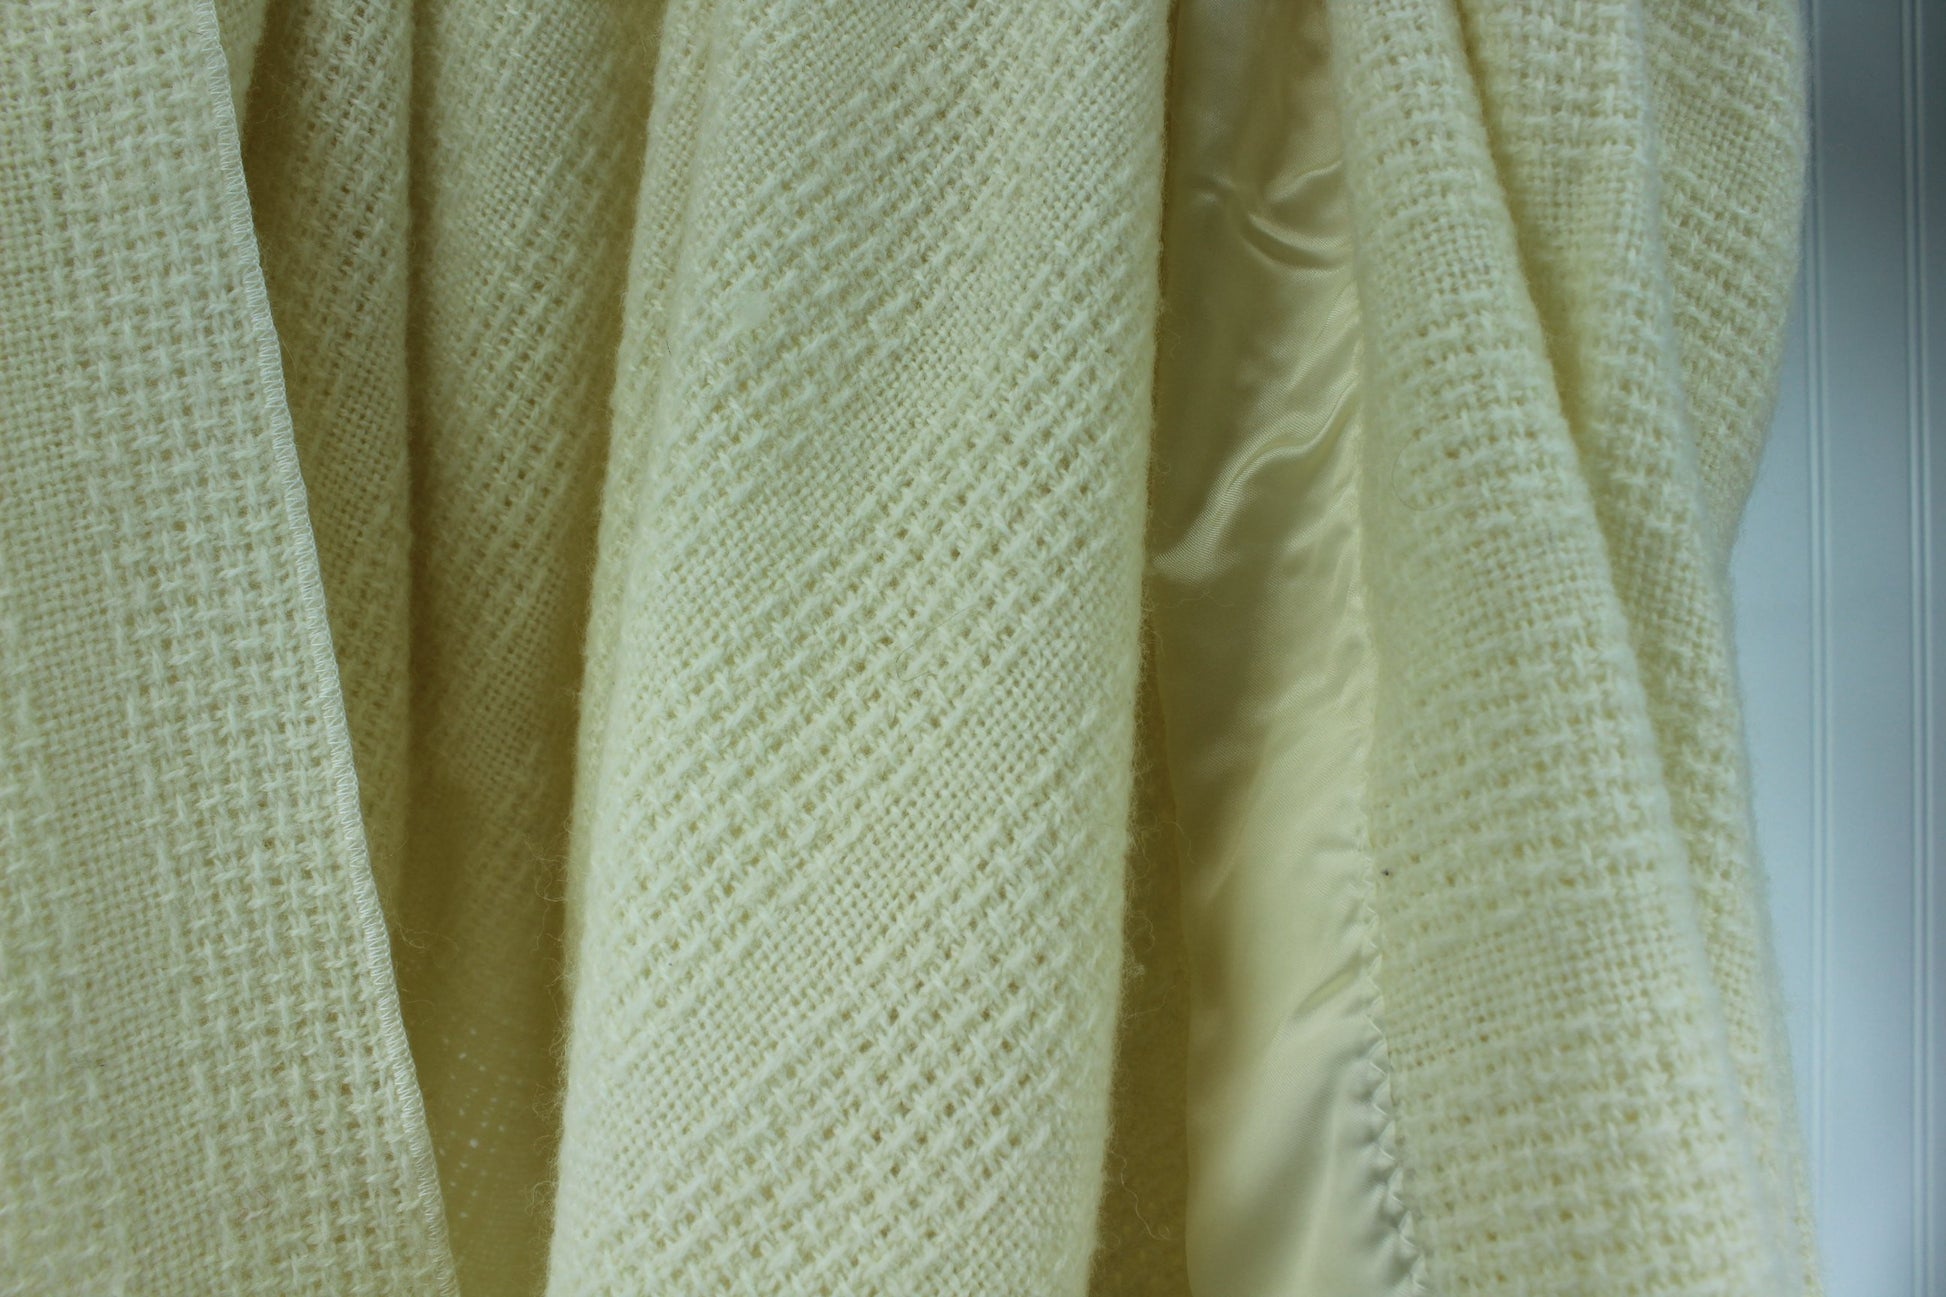 Faribo Ivory Washable Wool Acrylic Blend Blanket Basketweave Made USA Faribault MN beautiful weave